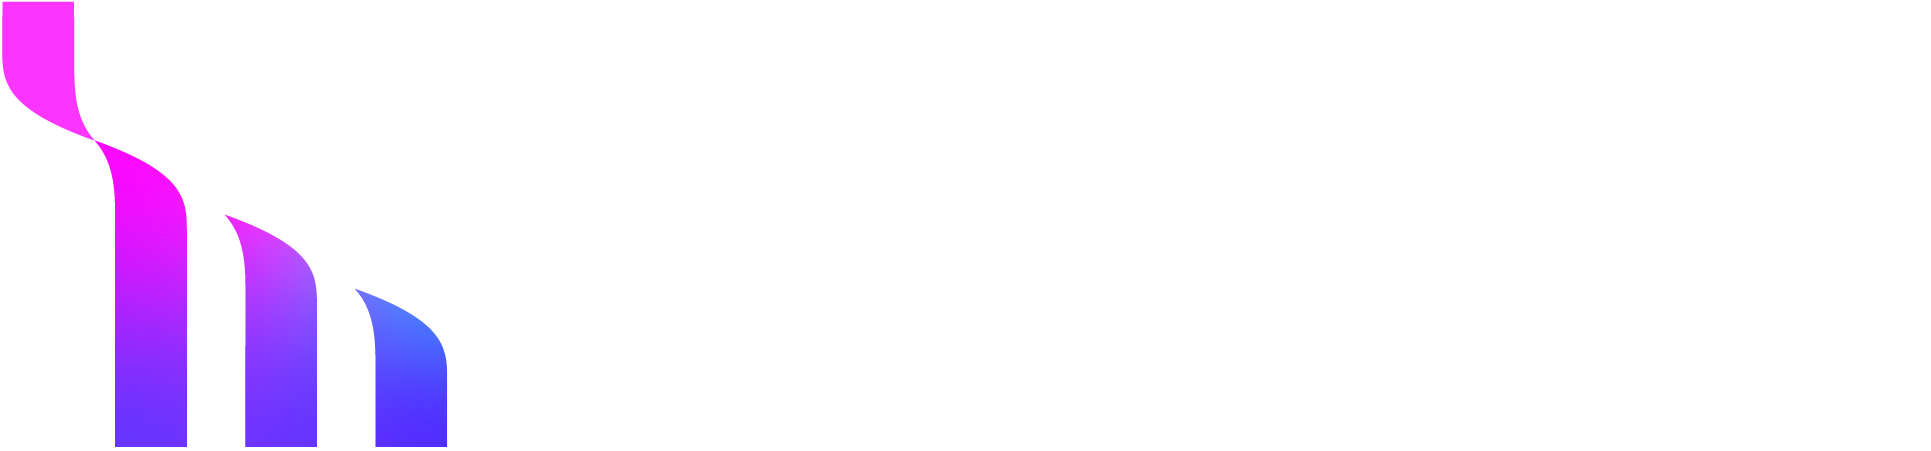 Immersve Logo